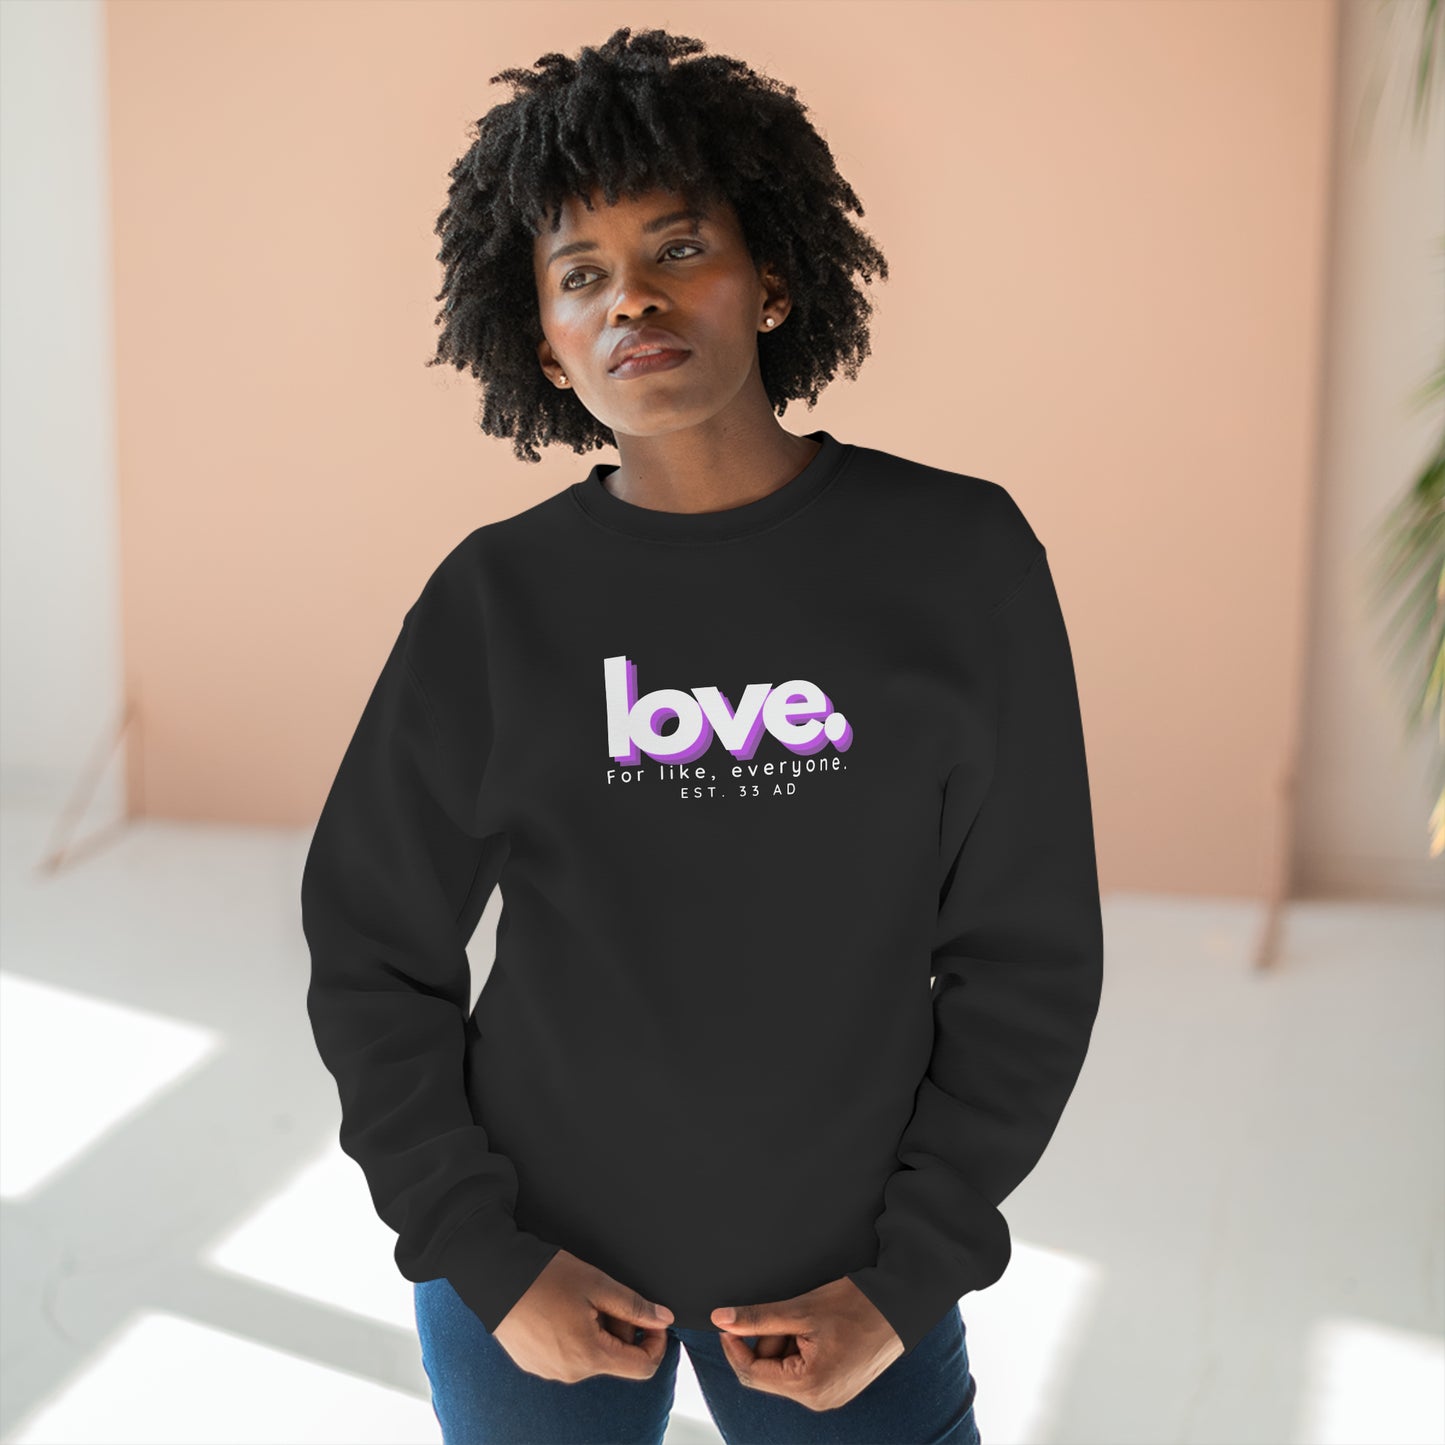 Love, Pink Shadow, Christian Sweatshirt for Men and Women